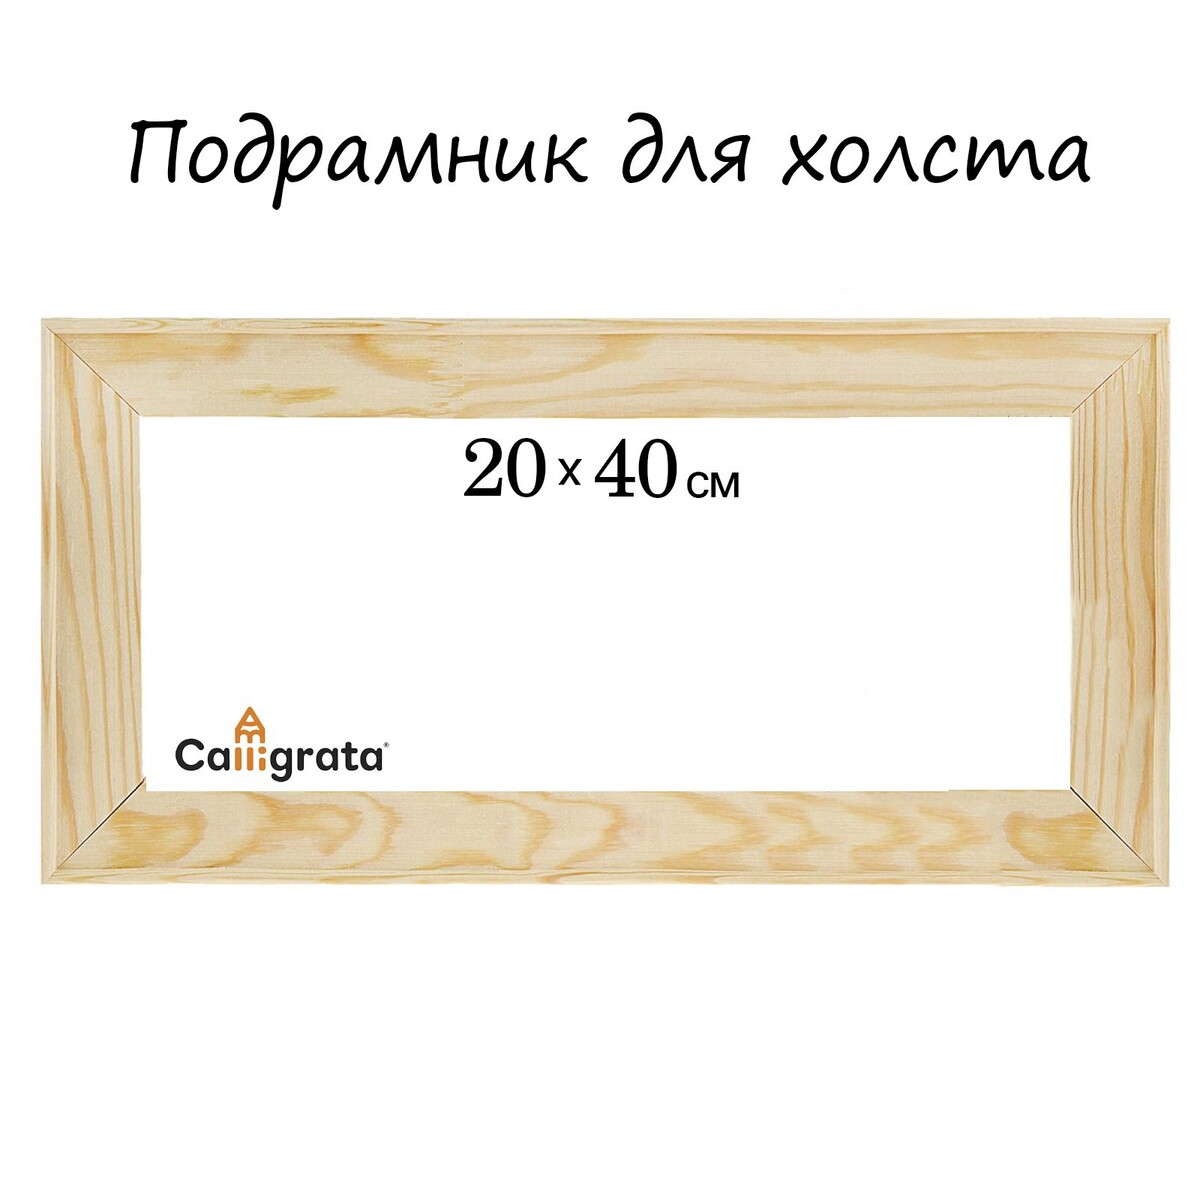 Подрамник для холста, 1.8 x 20 x 40 см, ширина рамы 36 мм Calligrata 01044393 - фото 1